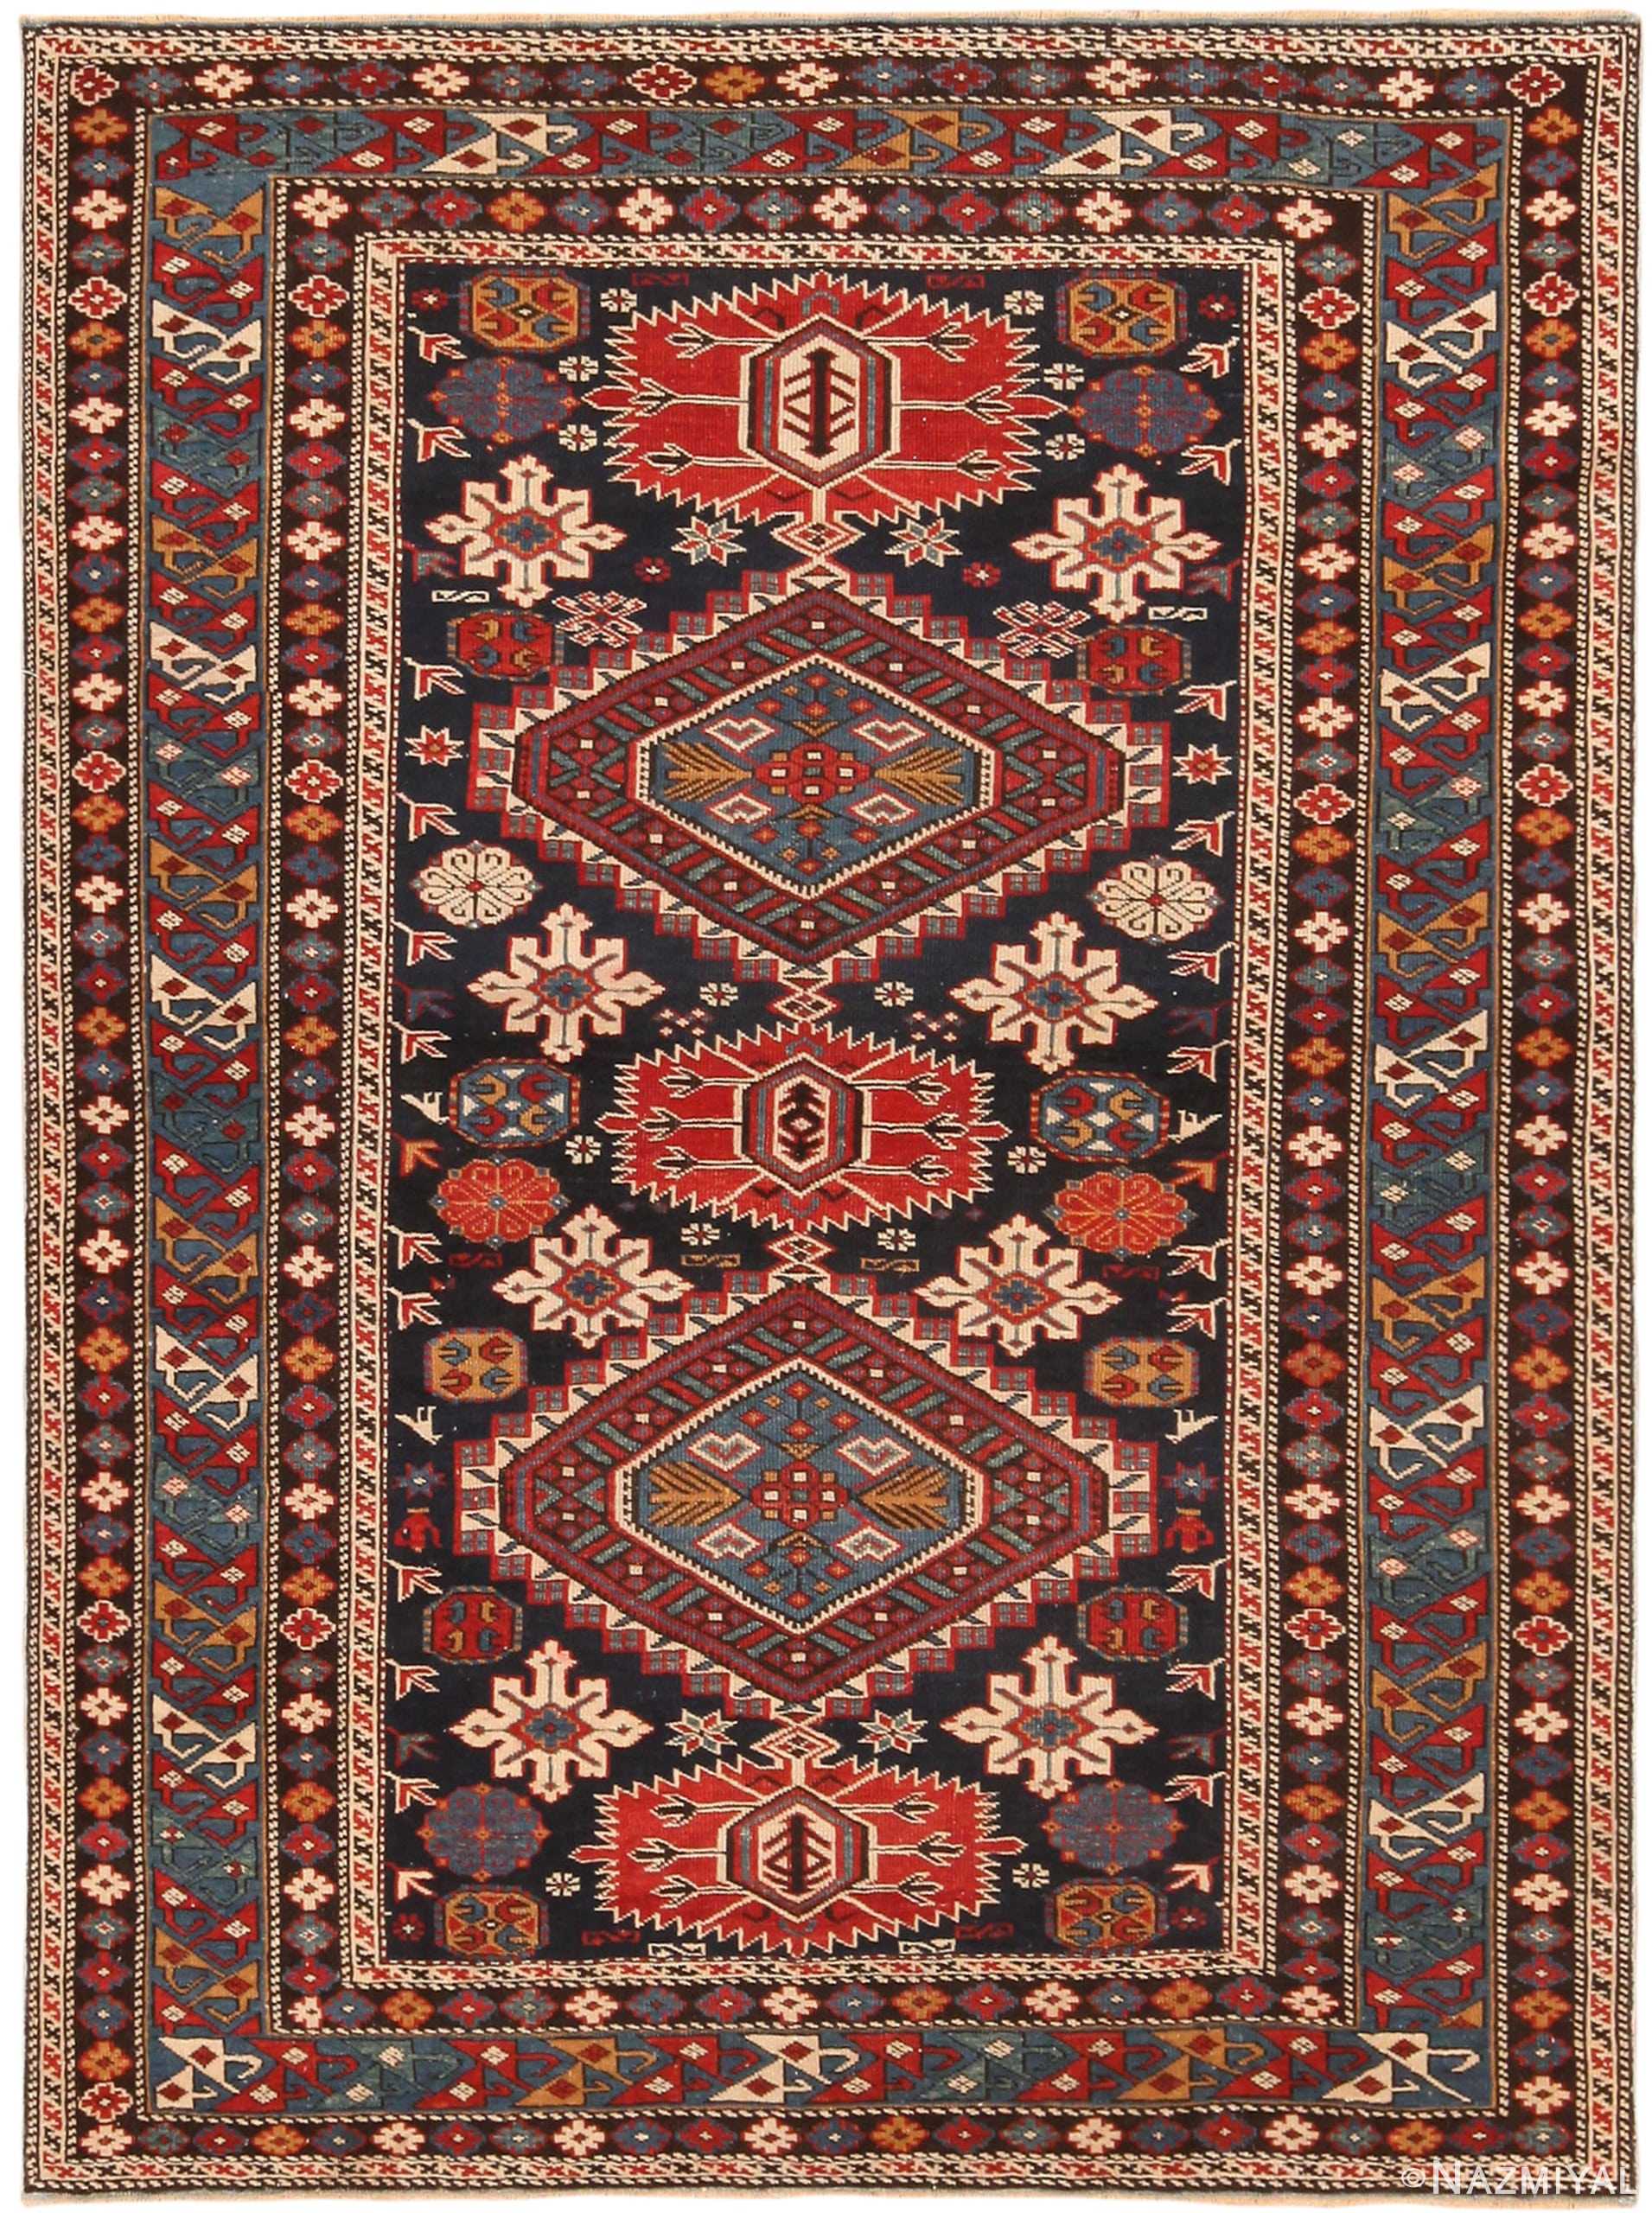 Magnificent Antique Caucasian Karakashly Rug 71159 by Nazmiyal Antique Rugs